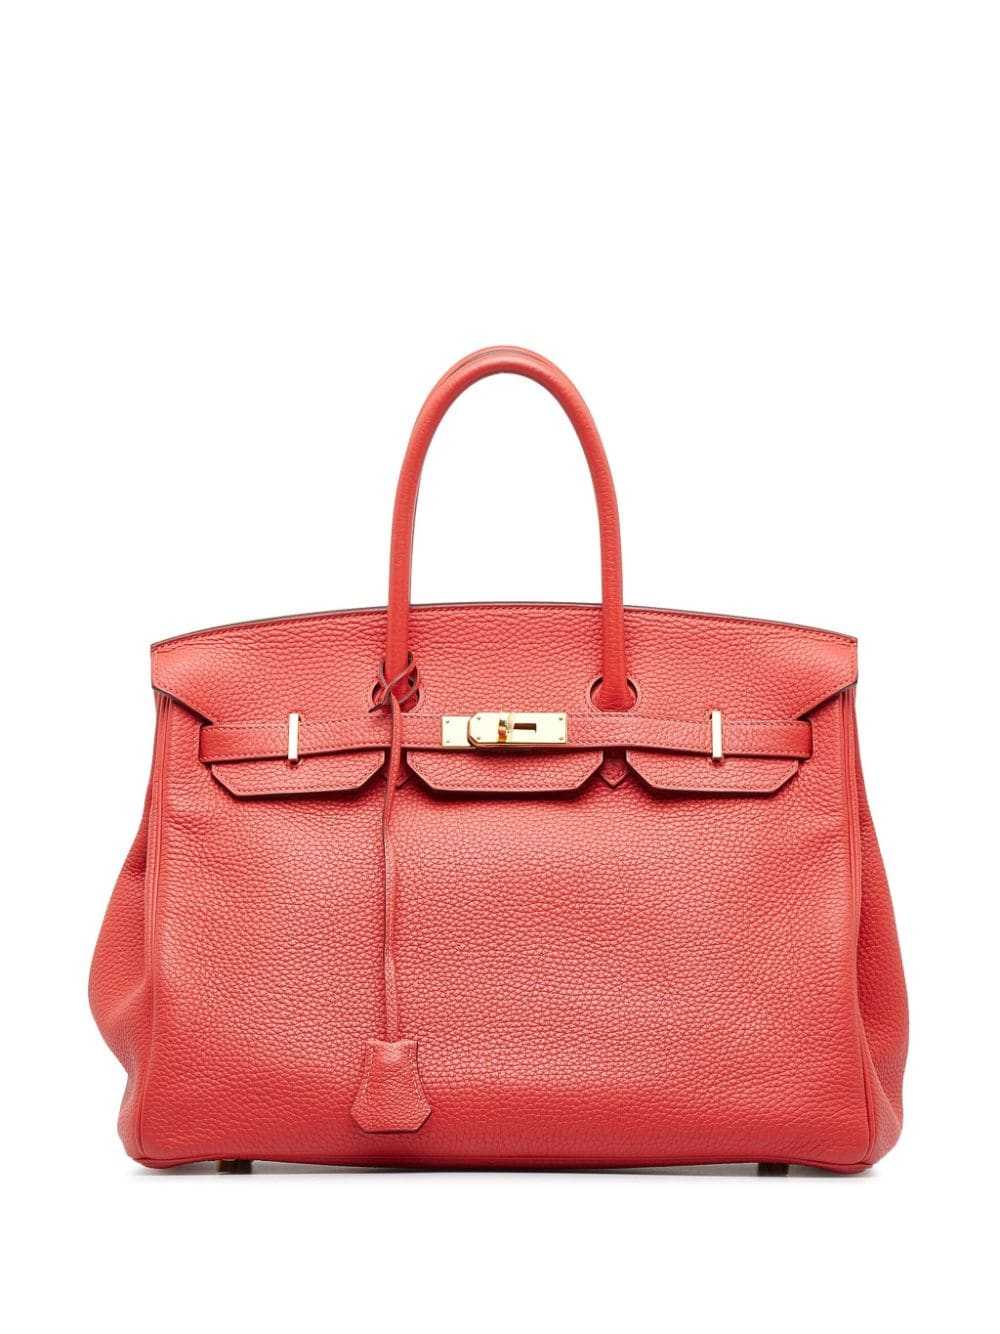 Hermès Pre-Owned 2014 Togo Birkin 35 handbag - Red - image 1